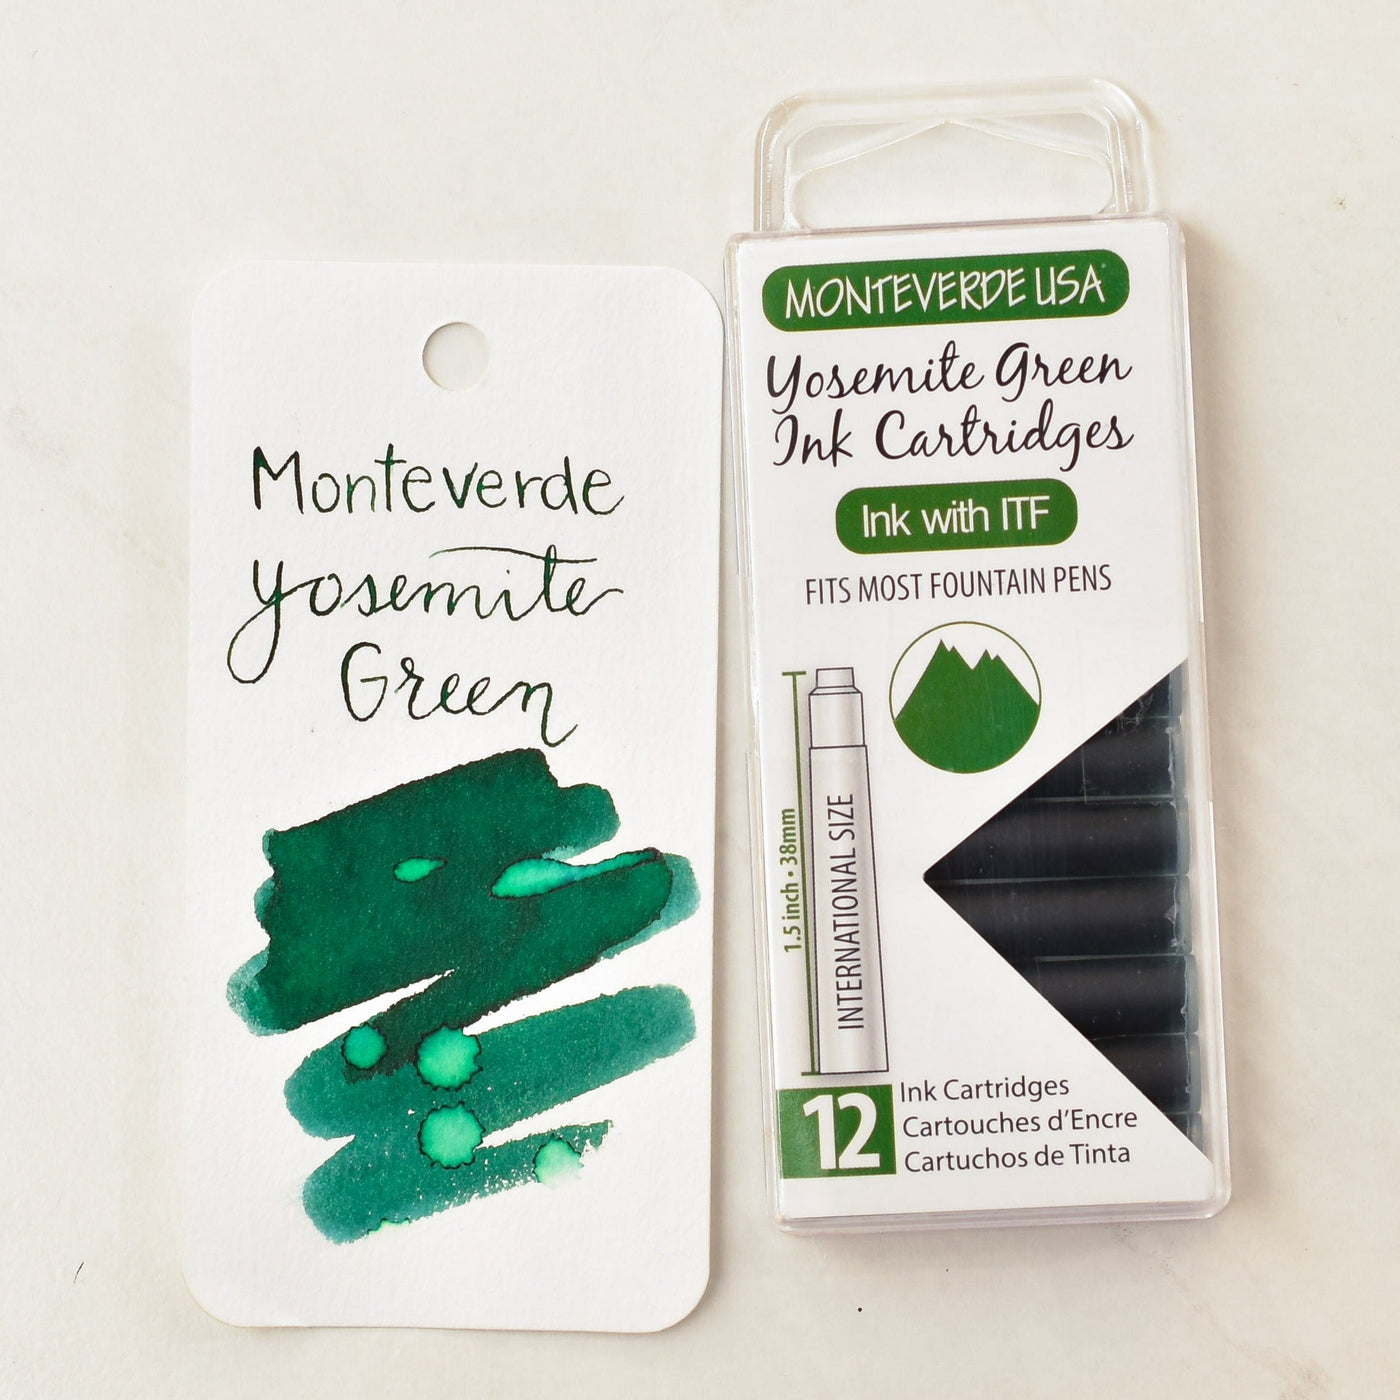 Monteverde Yosemite Green Ink Cartridges